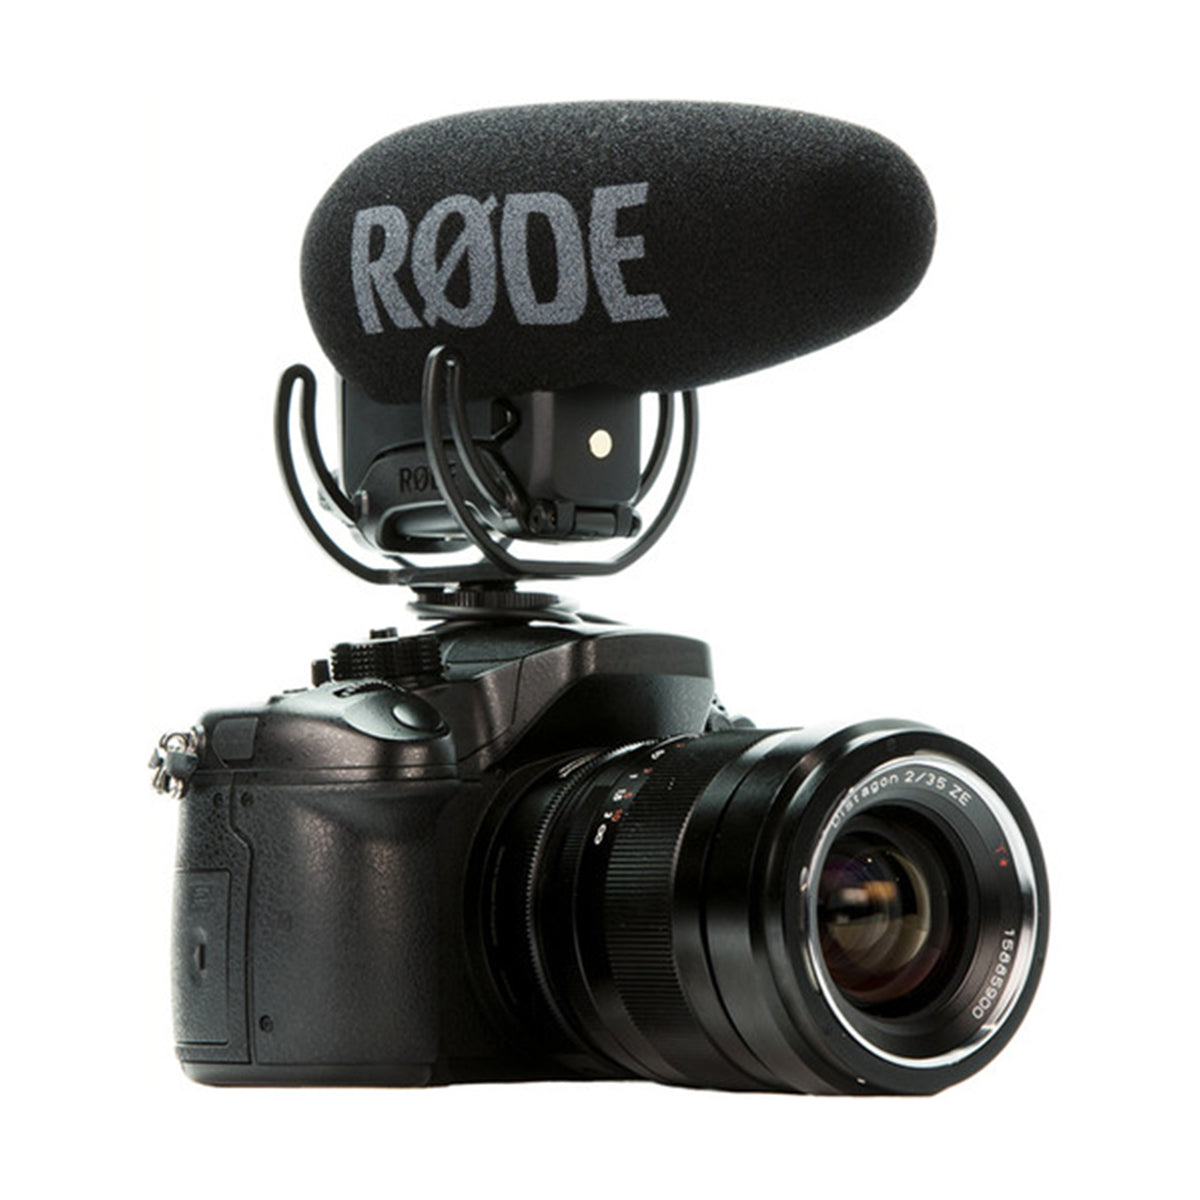 Rode VMPR VideoMic Pro R with Rycote Lyre Shock Mount, Black